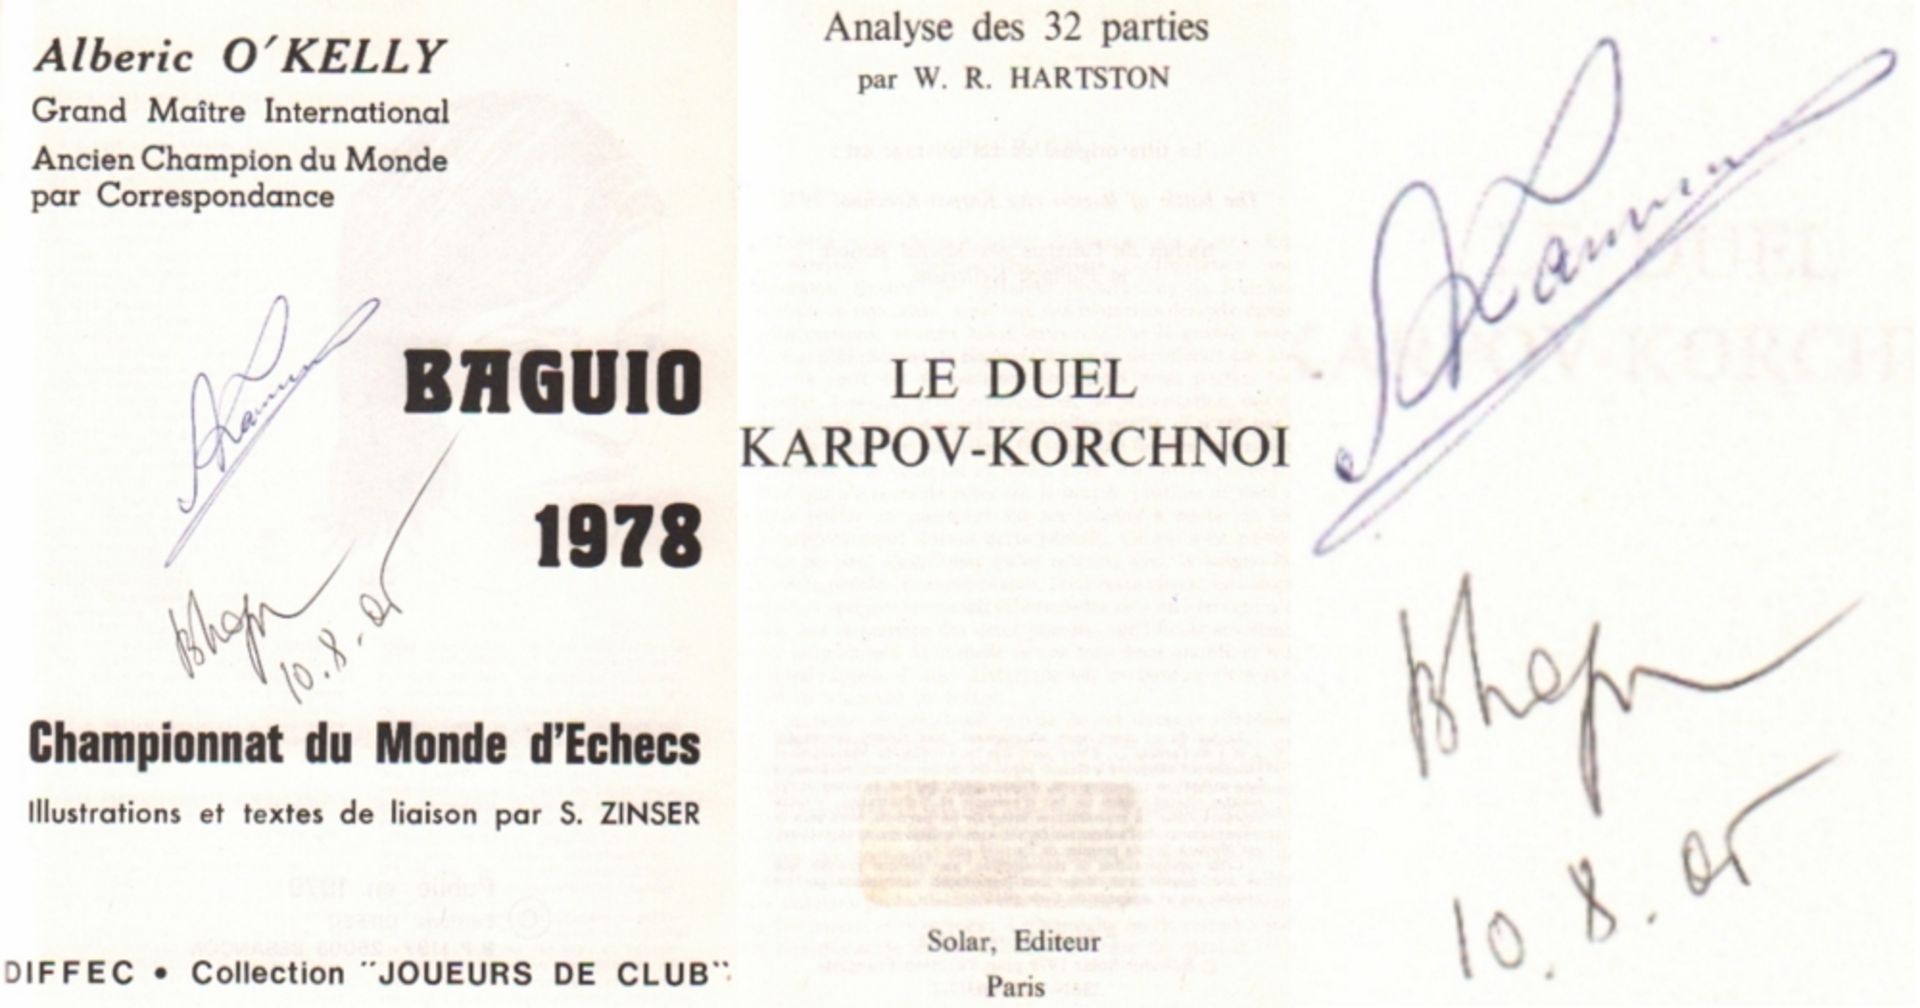 Karpow – Kortschnoi. O’Kelly, A. Baguio 1978. Championnat du Monde d’Echecs. Besançon, Diffec, ca.